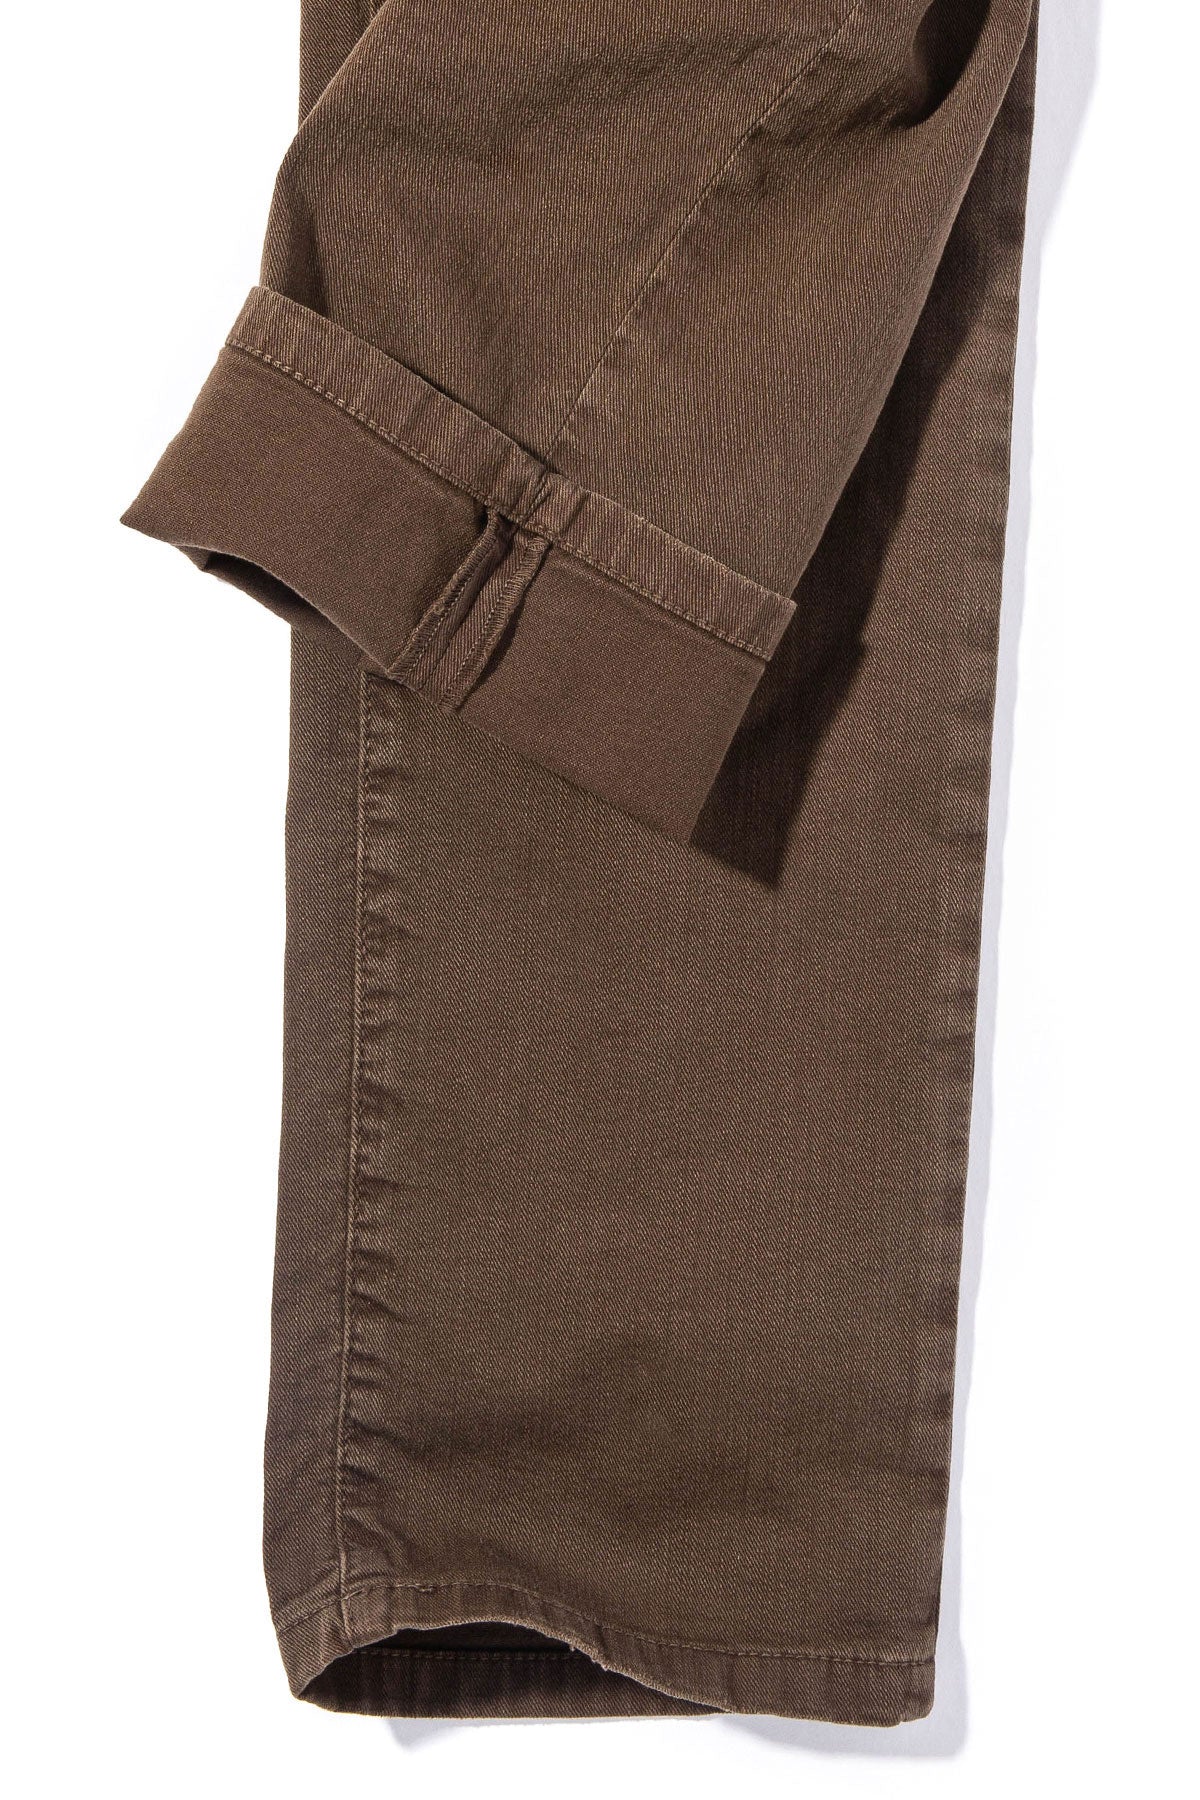 Ouray 5-Pocket Stretch Twill in Liquirizia | Mens - Pants - 5 Pocket | Teleria Zed